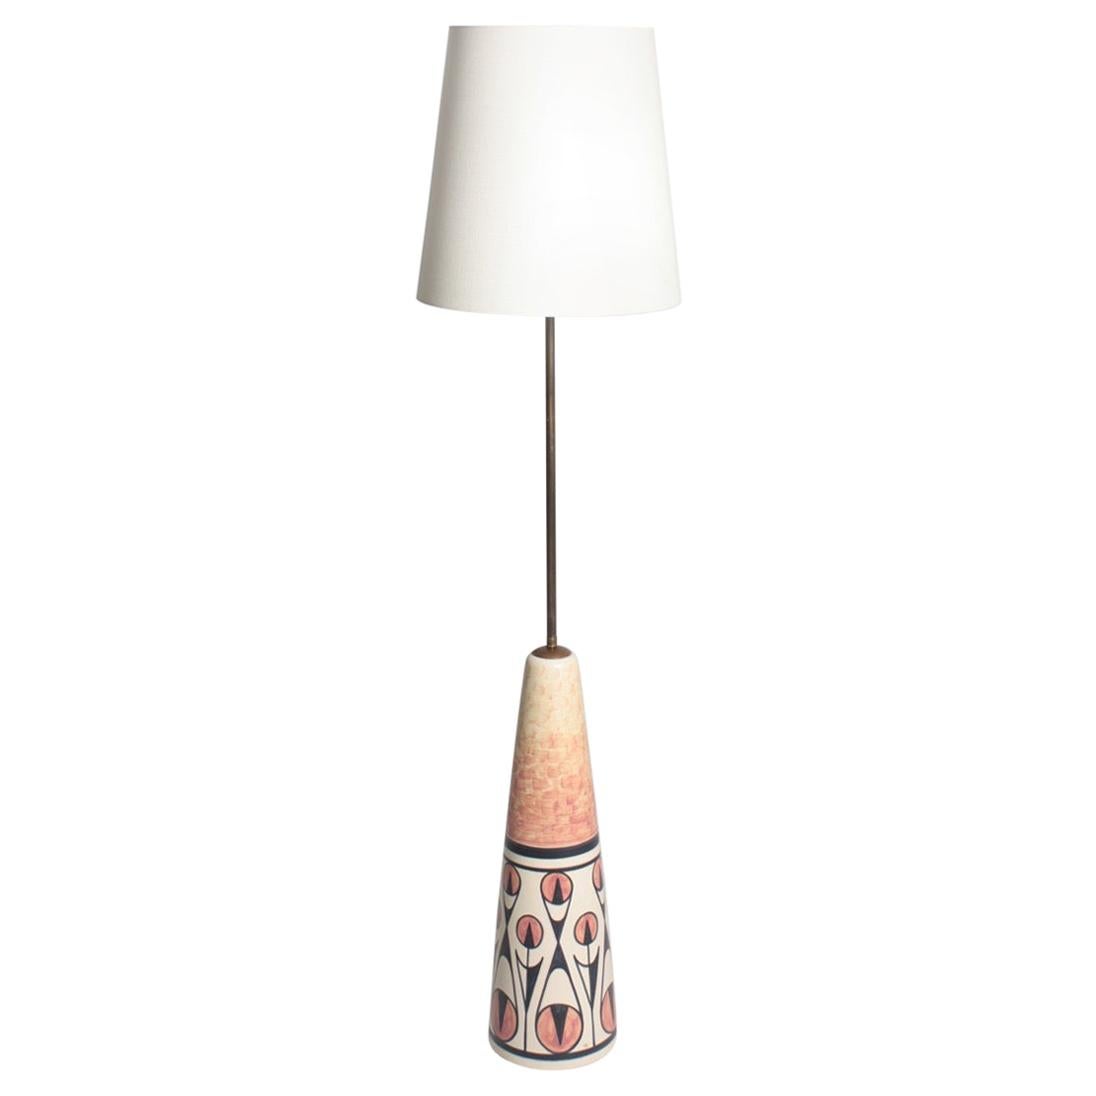 Tall Midcentury Danish Design Ceramic Floor Lamp by Søholm, 1960s